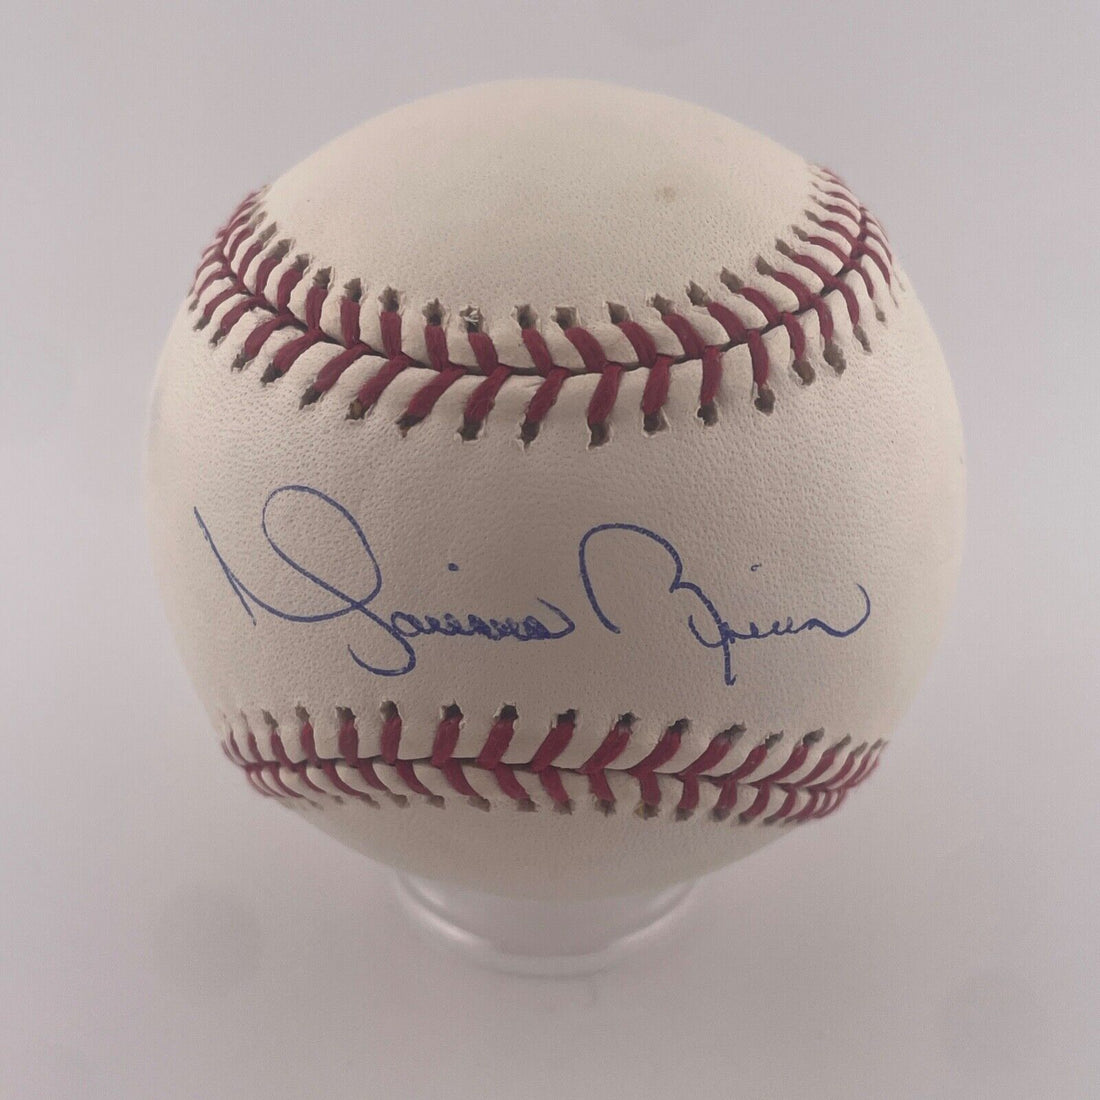 Mariano Rivera Signed 100th Anniversary Yankees Commemorative Ball. JSA